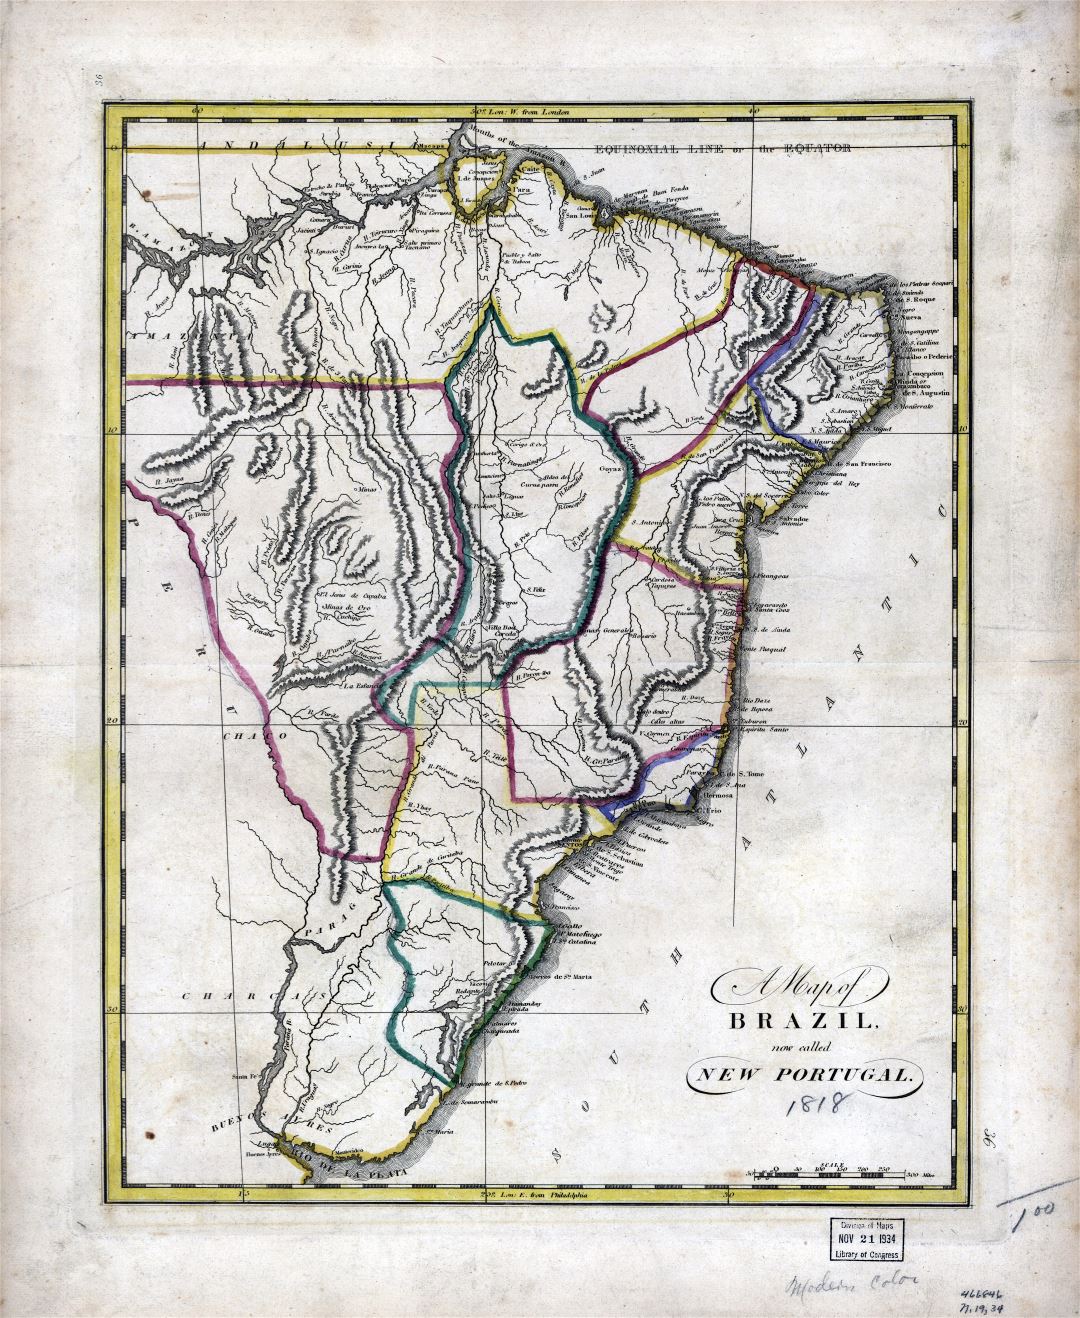 A gran escala mapa antiguo de Brasil (Nuevo Portugal) - 1818